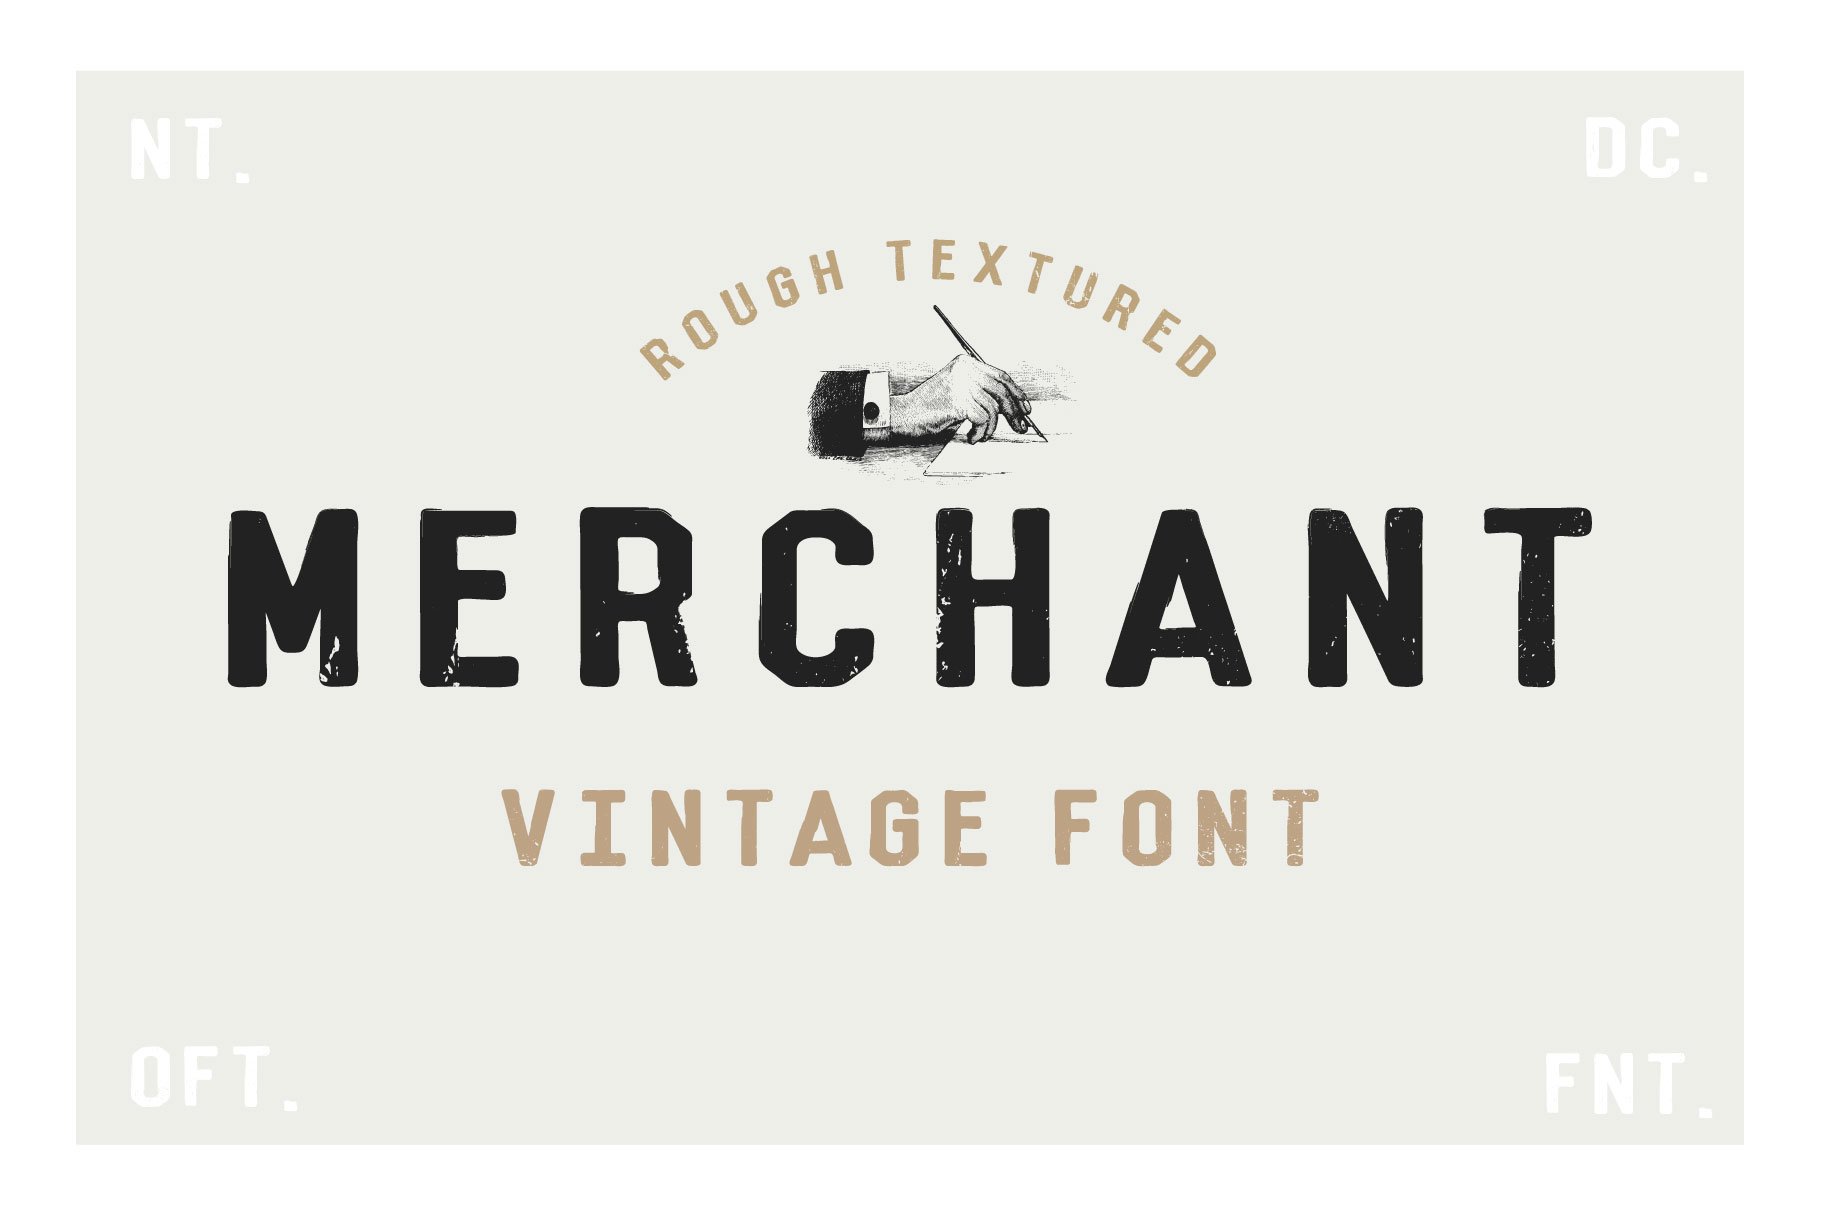 Merchant - Vintage Dry Brush Font cover image.